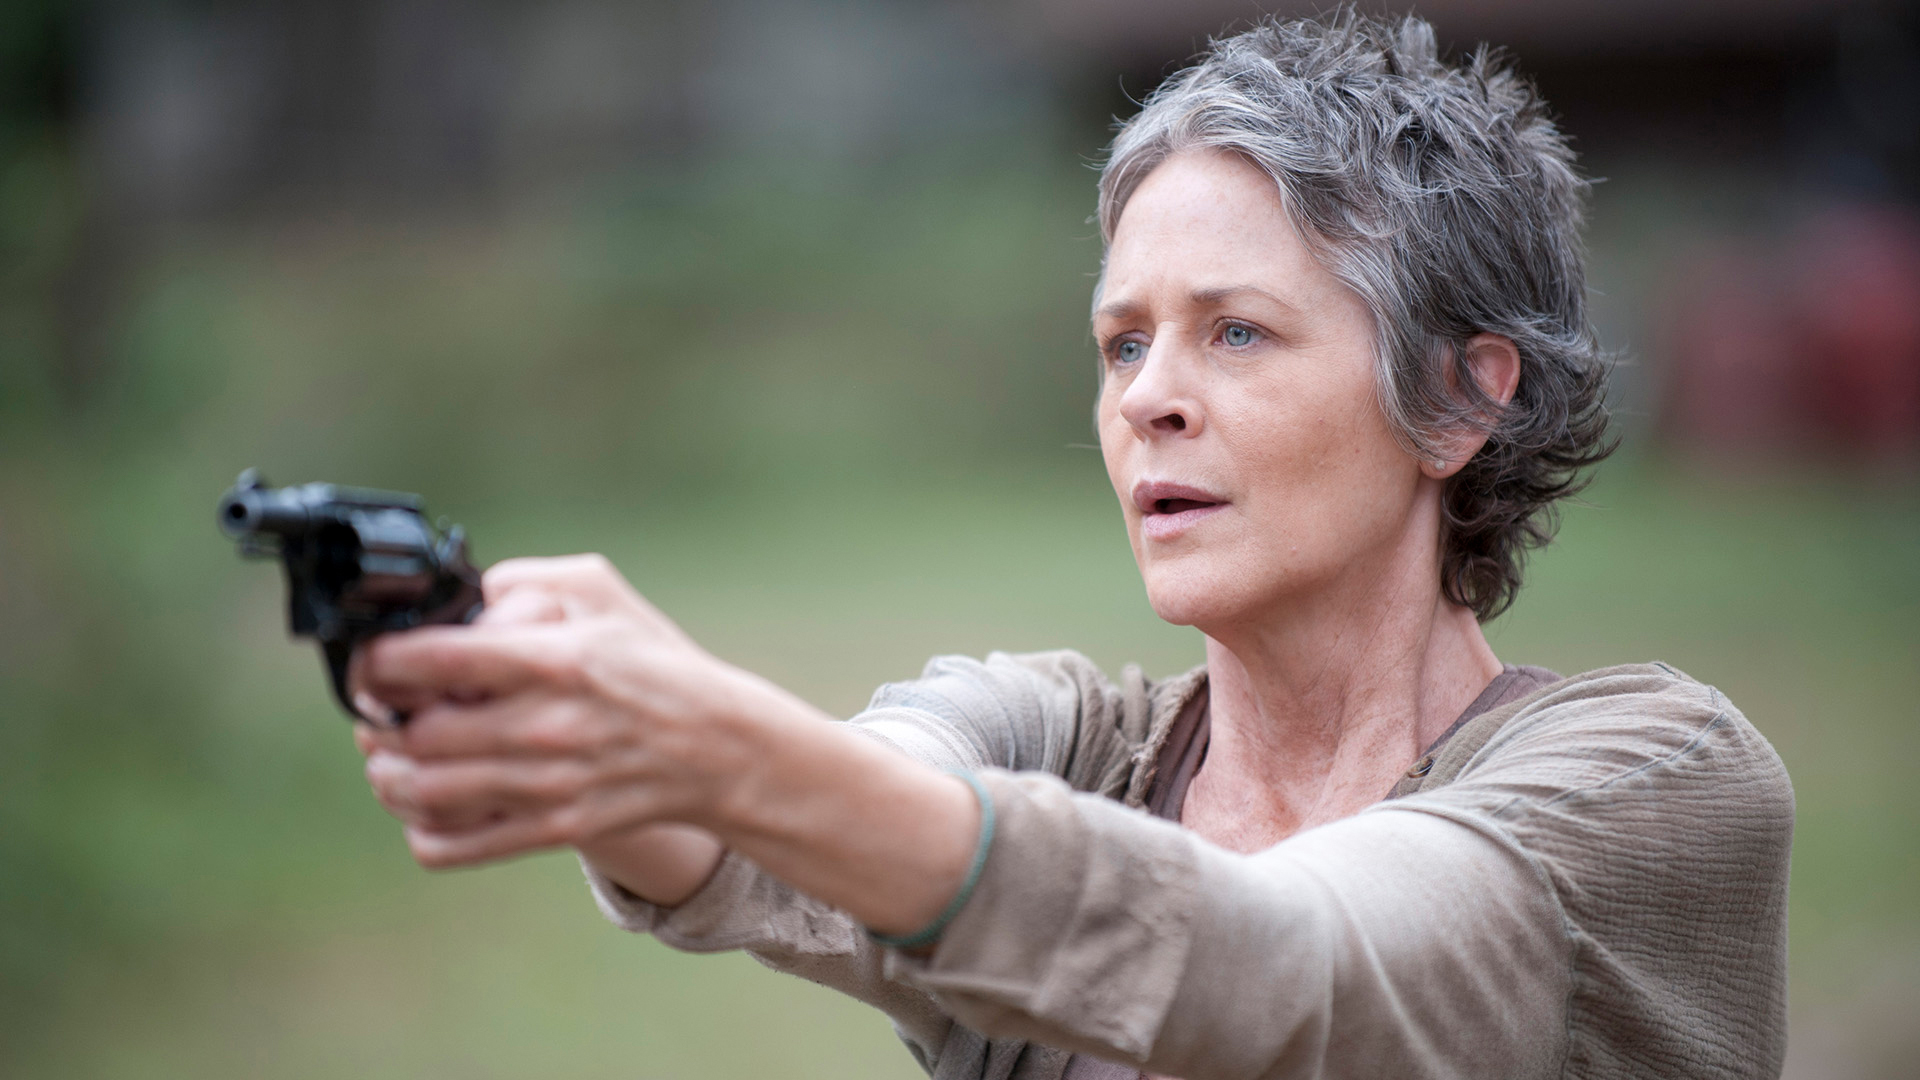 The Walking Dead: Best of Carol Season 1 Episode 3 - The Grove: Best of Carol Edition